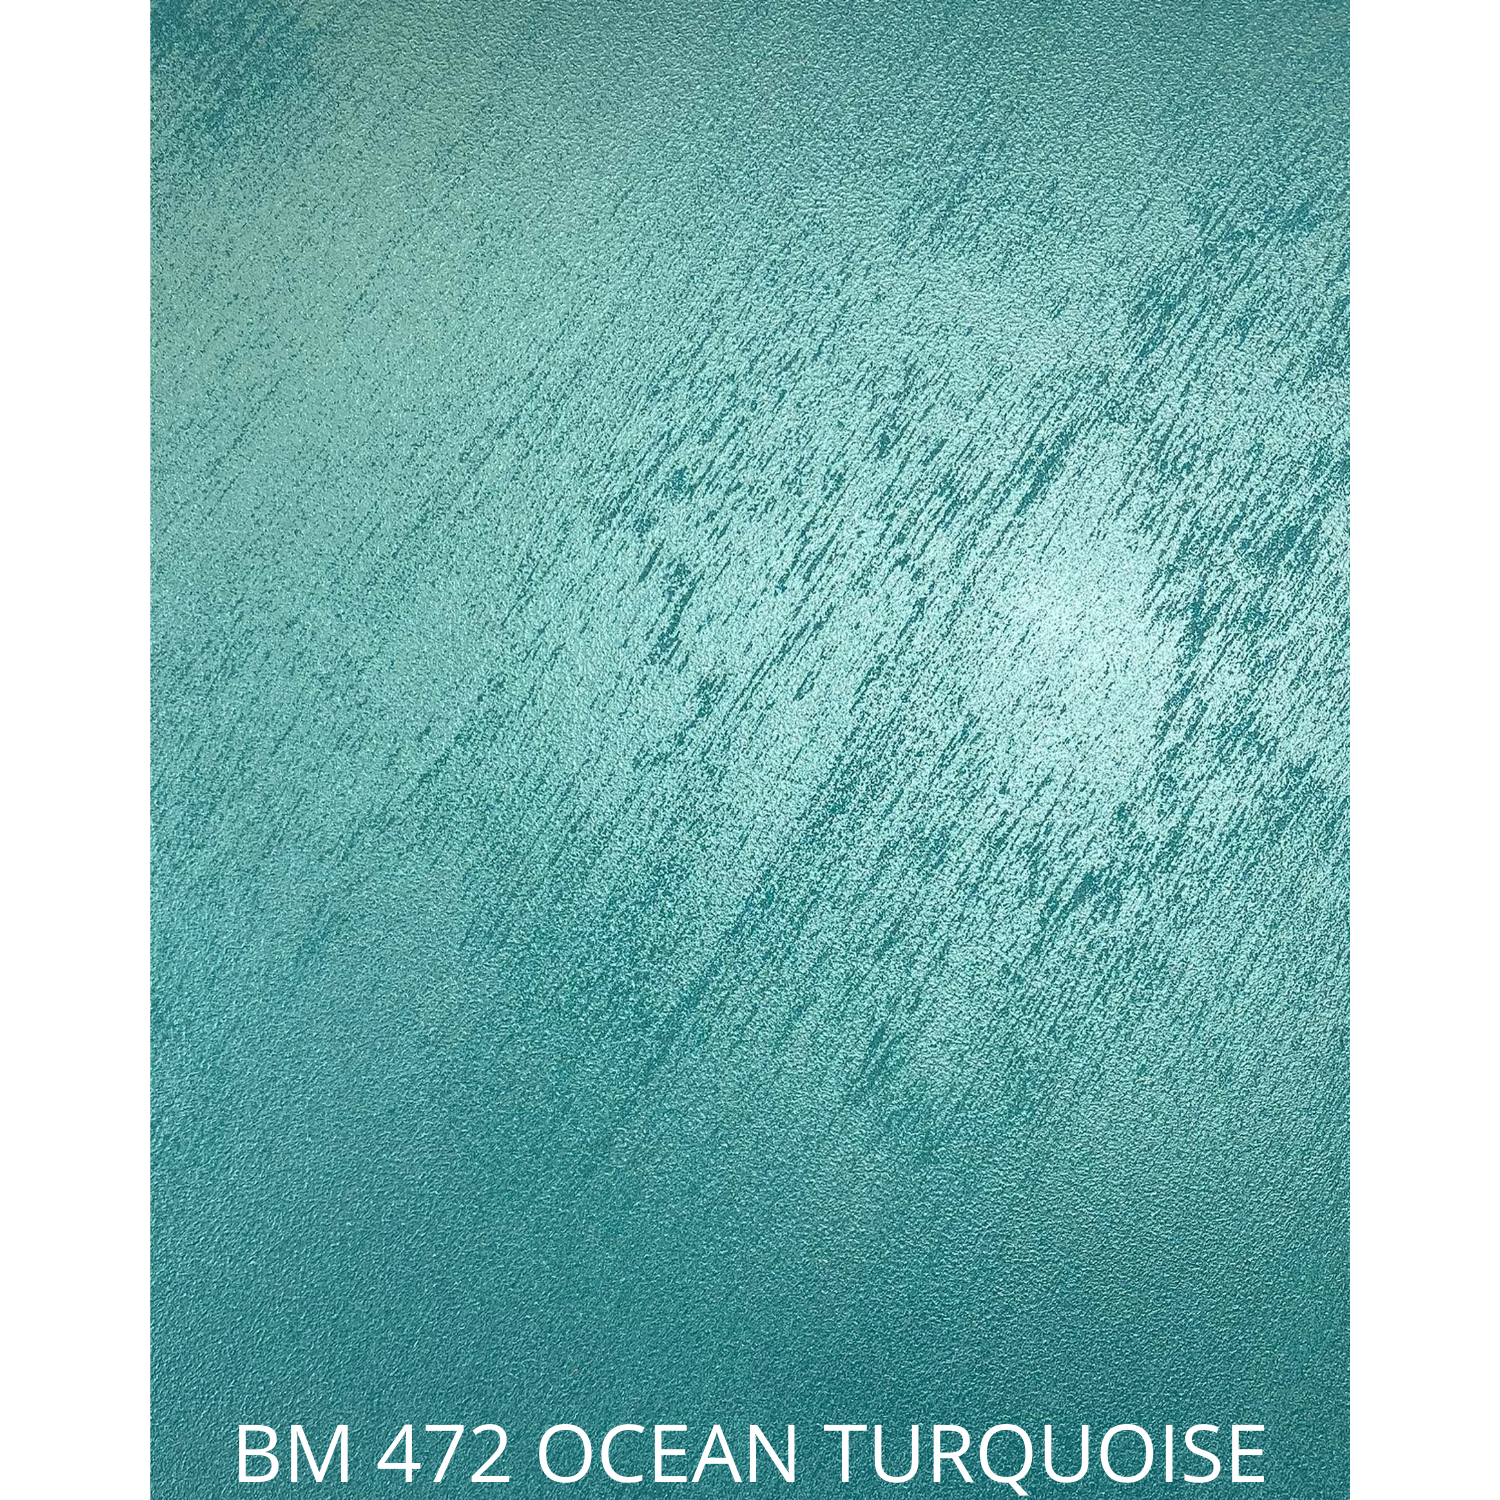 BM 472 OCEAN TURQUOISE